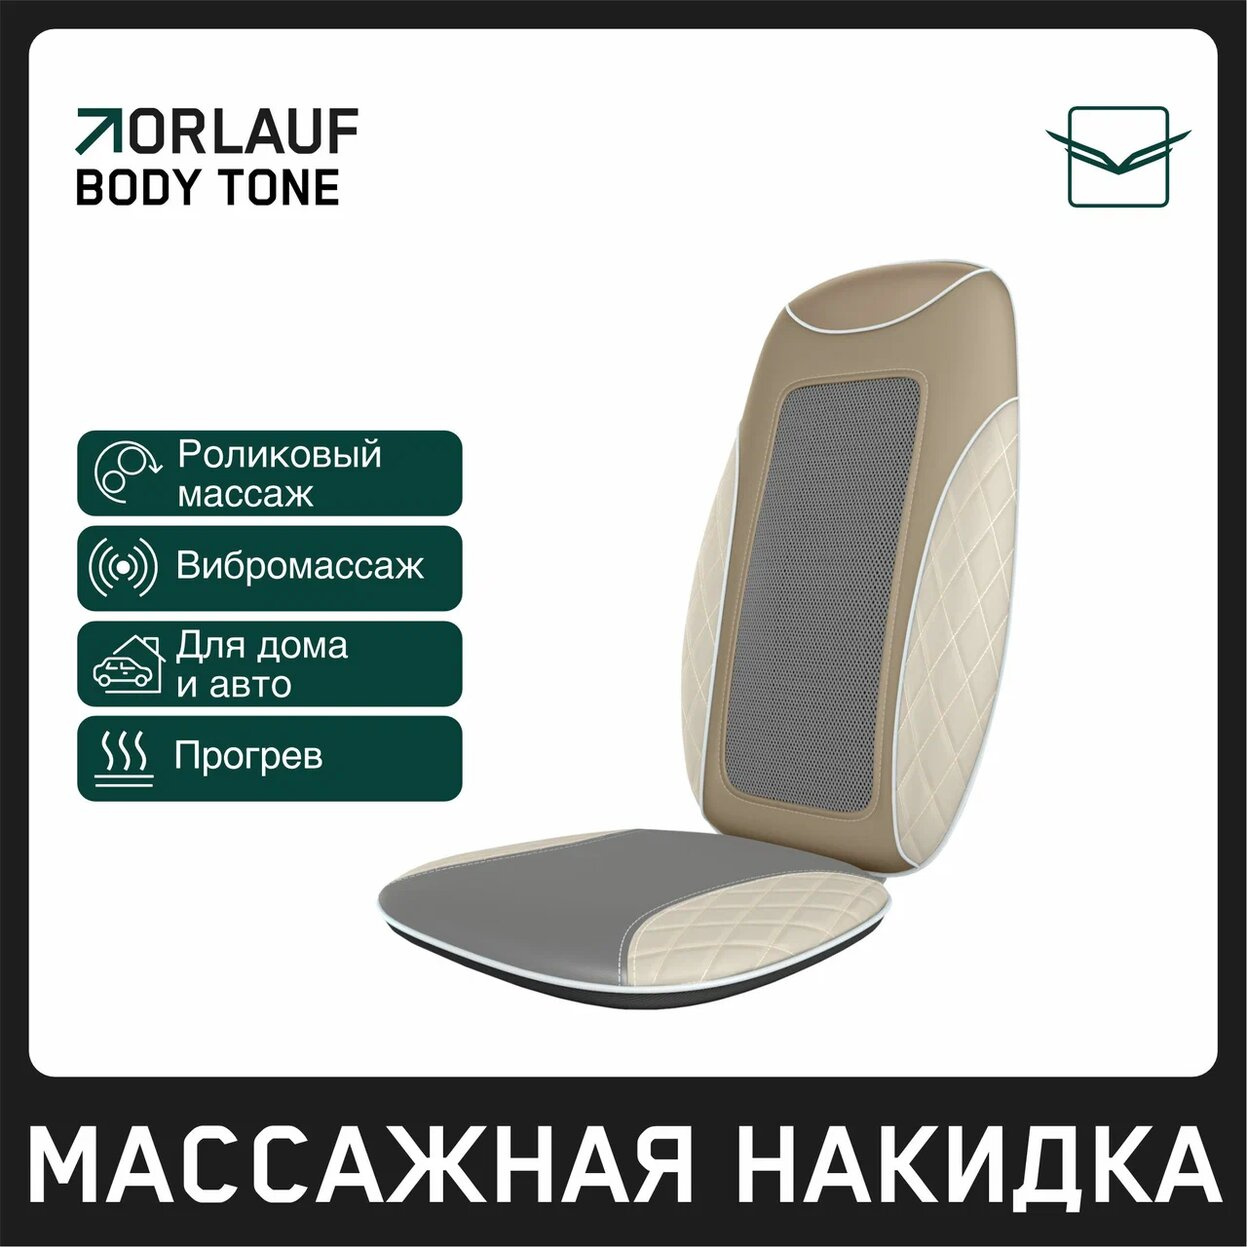 Body Tone в Нижнем Новгороде по цене 15400 ₽ в категории каталог Orlauf